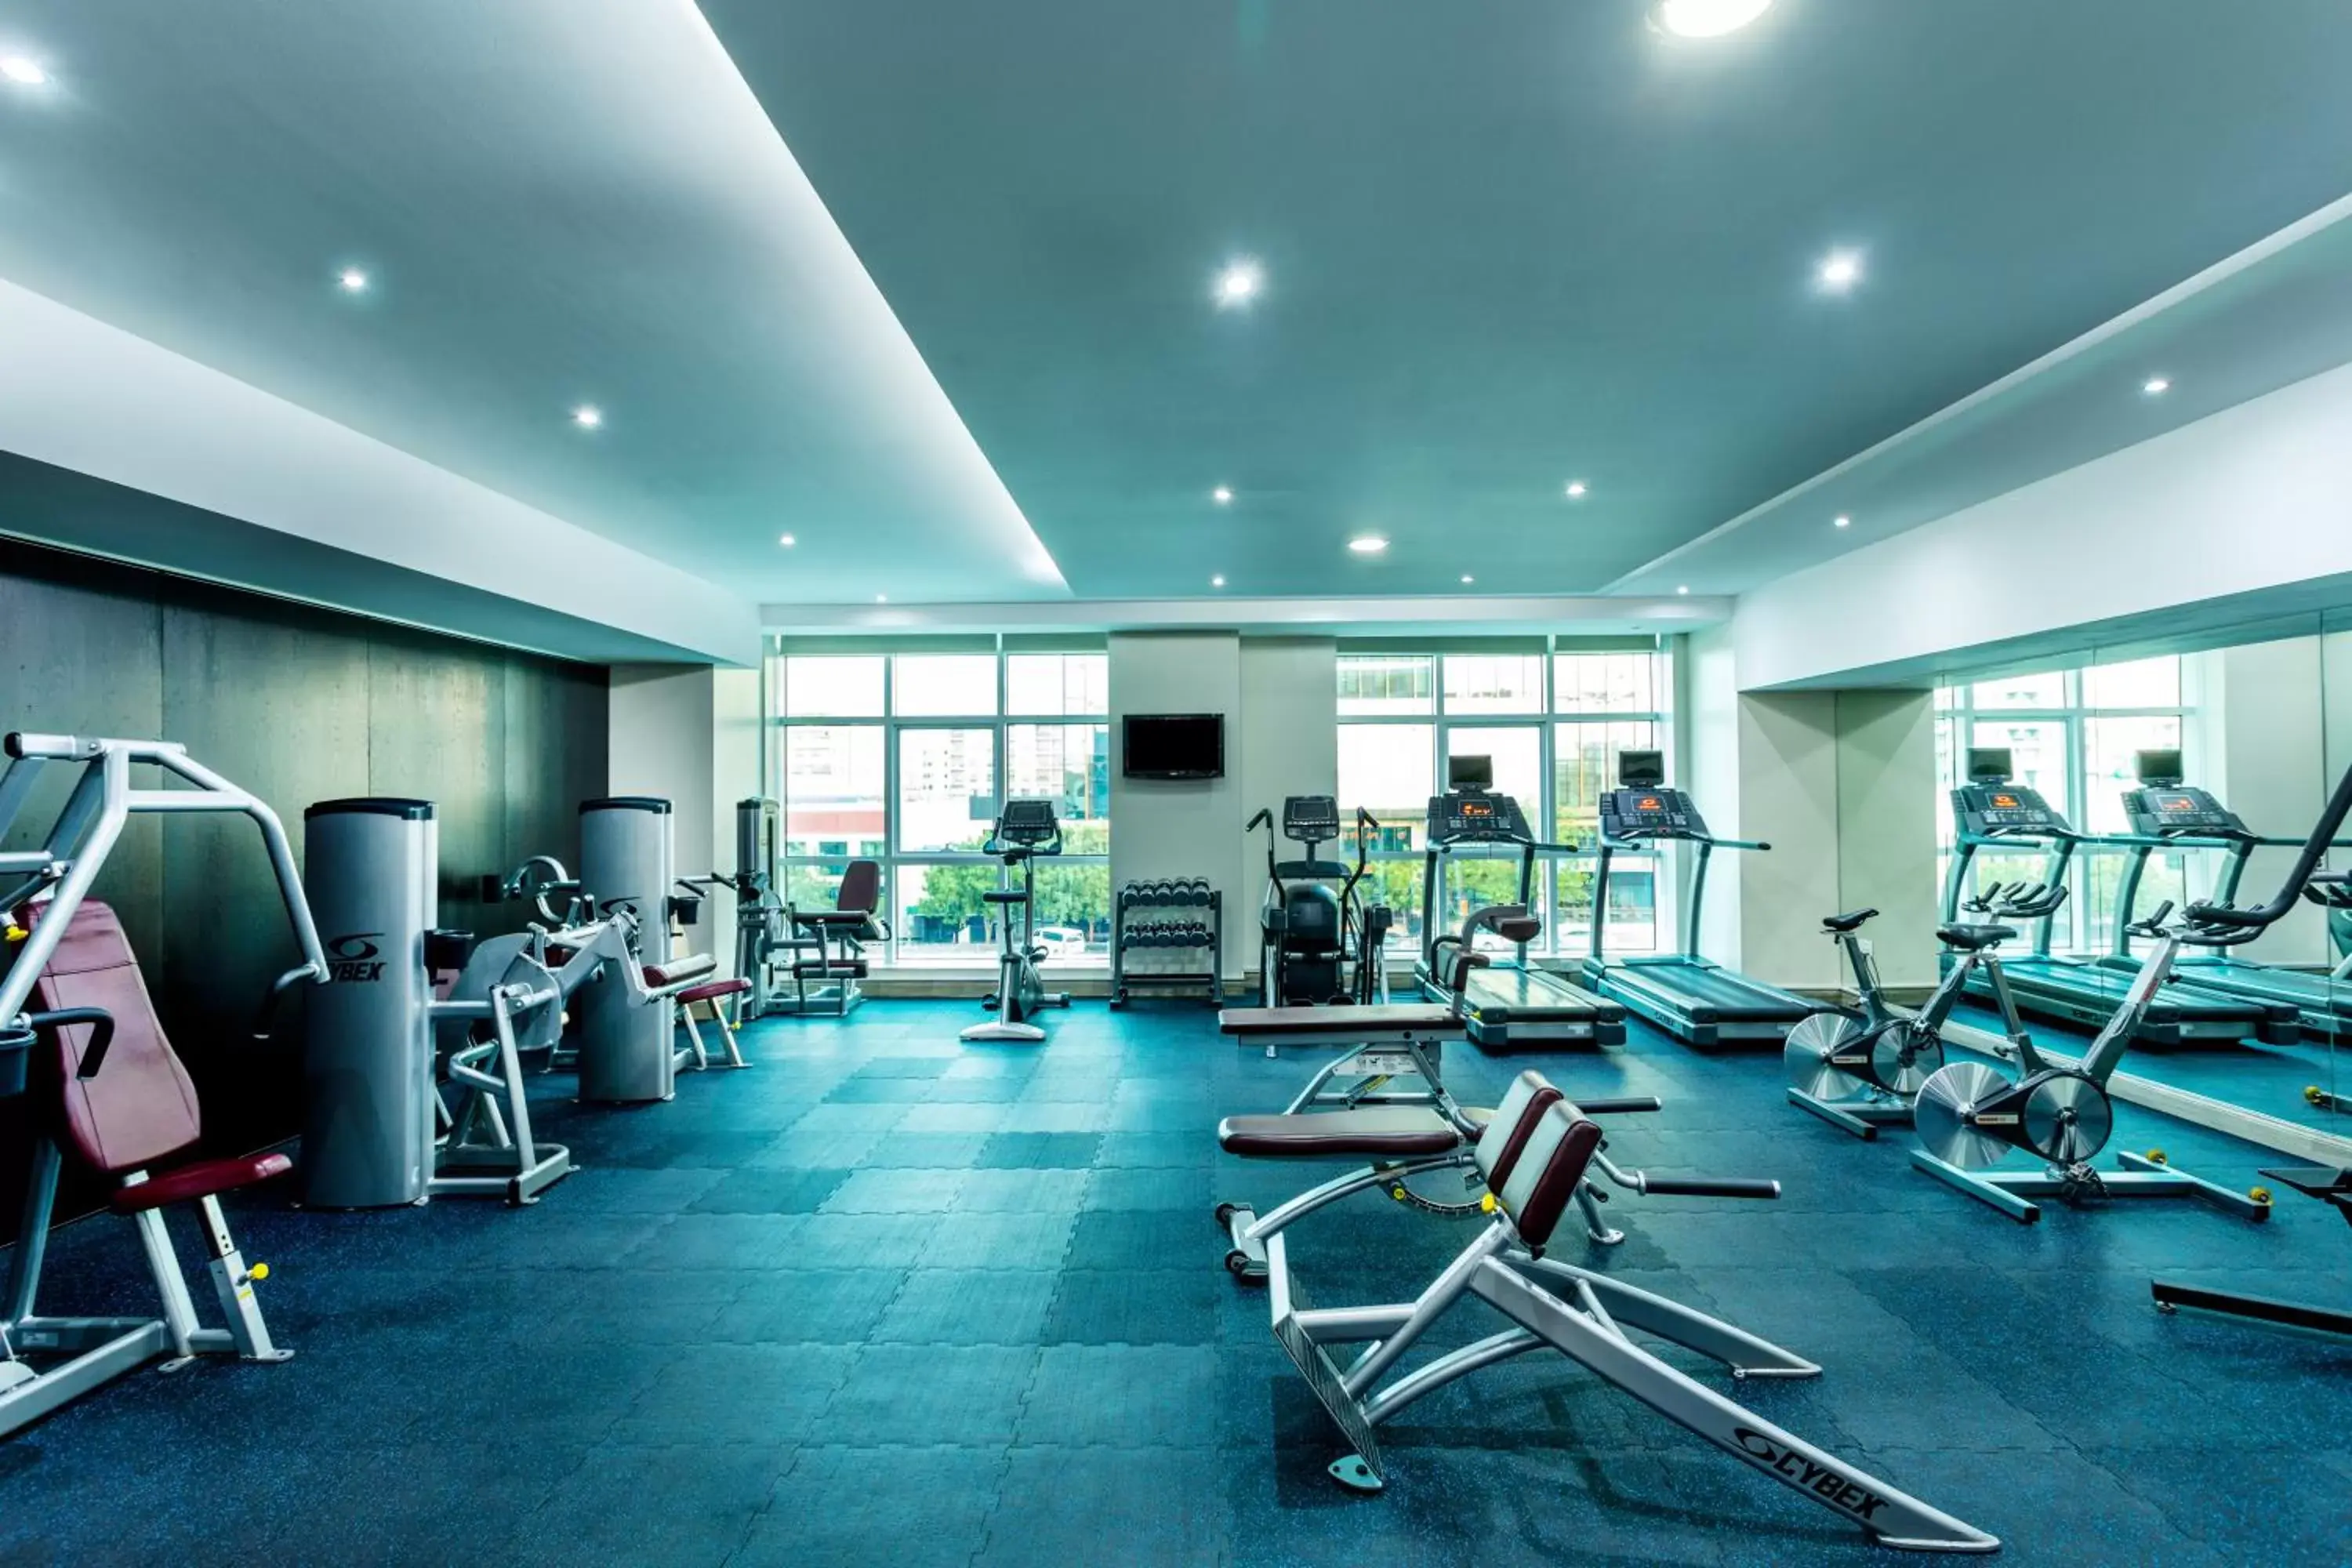 Fitness centre/facilities, Fitness Center/Facilities in Park Regis Kris Kin Hotel